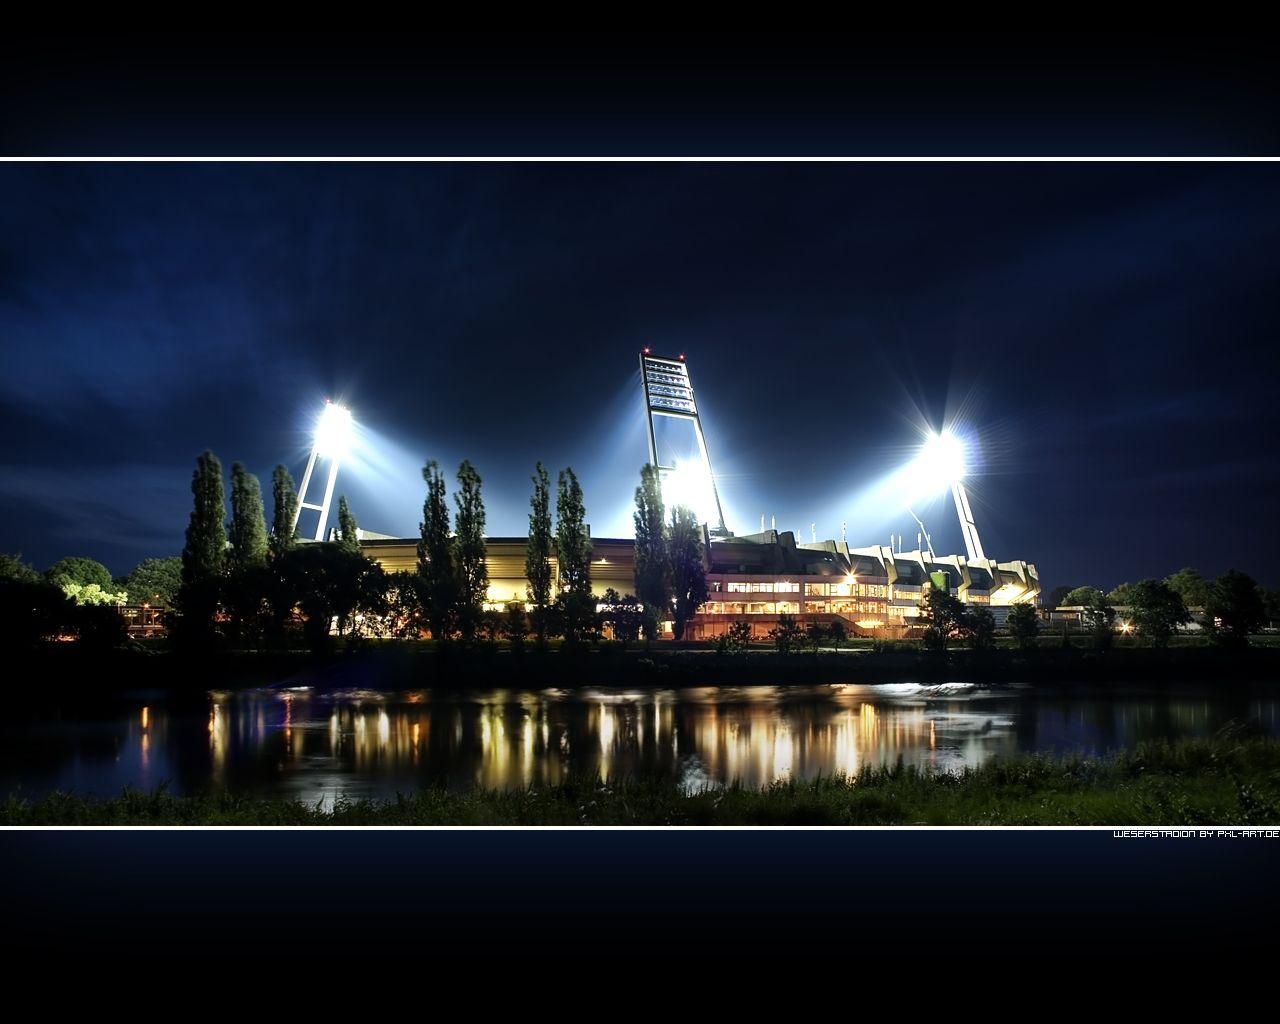 Signal Iduna Park BVB Stadium At Night Wallpaper free desktop